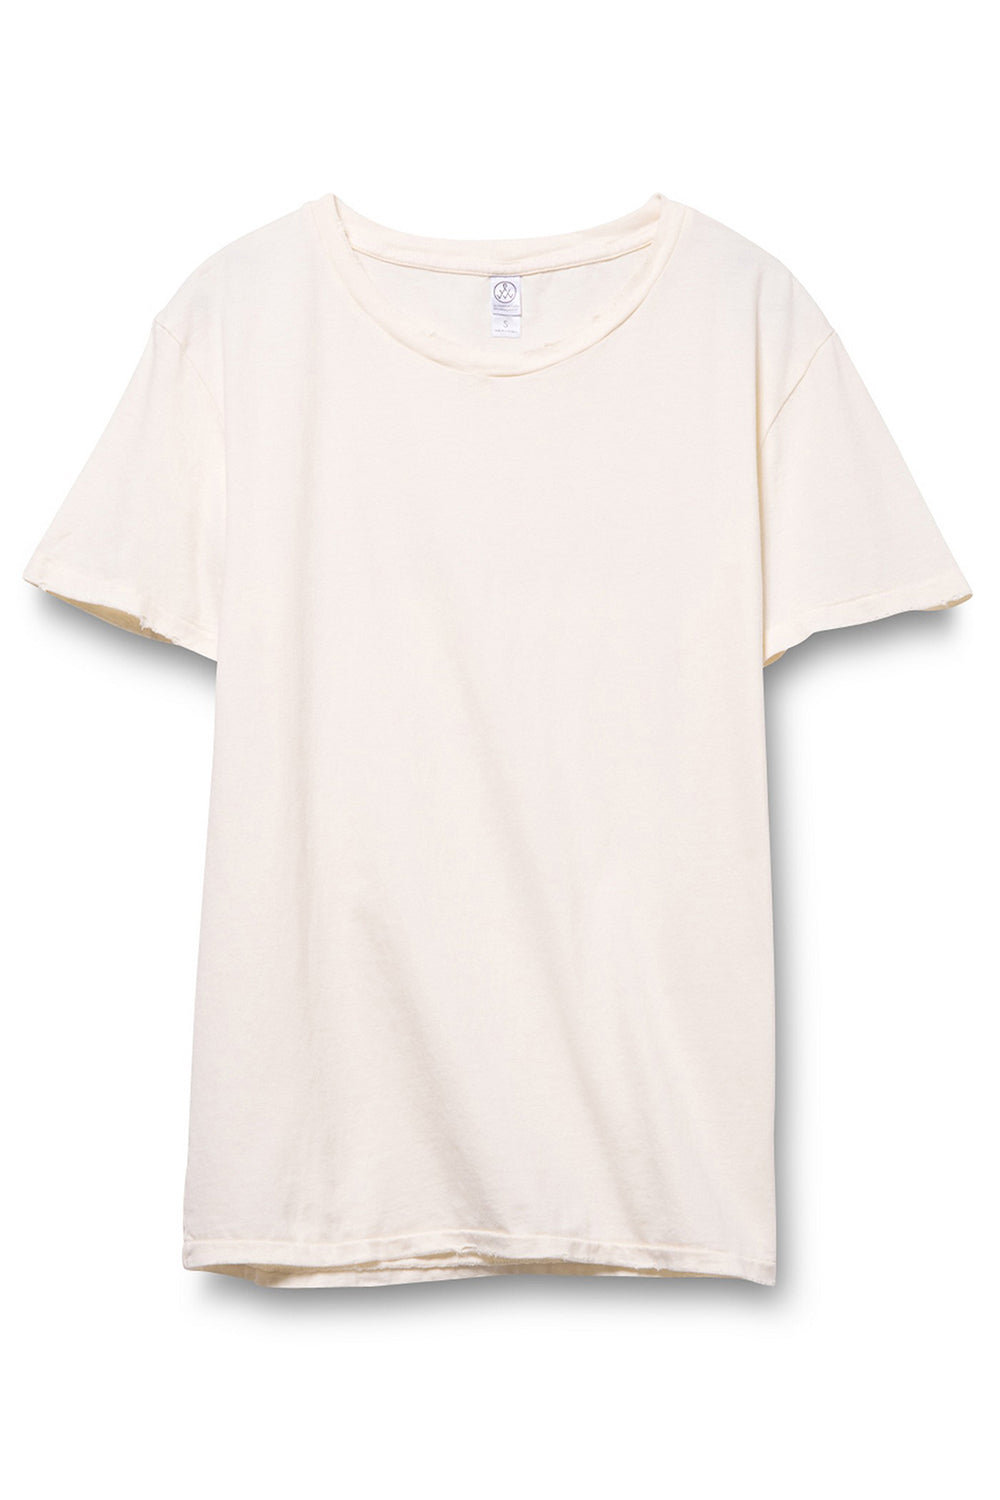 Alternative 04850C1/4850 Mens Heritage Distressed Short Sleeve Crewneck T-Shirt Vintage White Flat Front